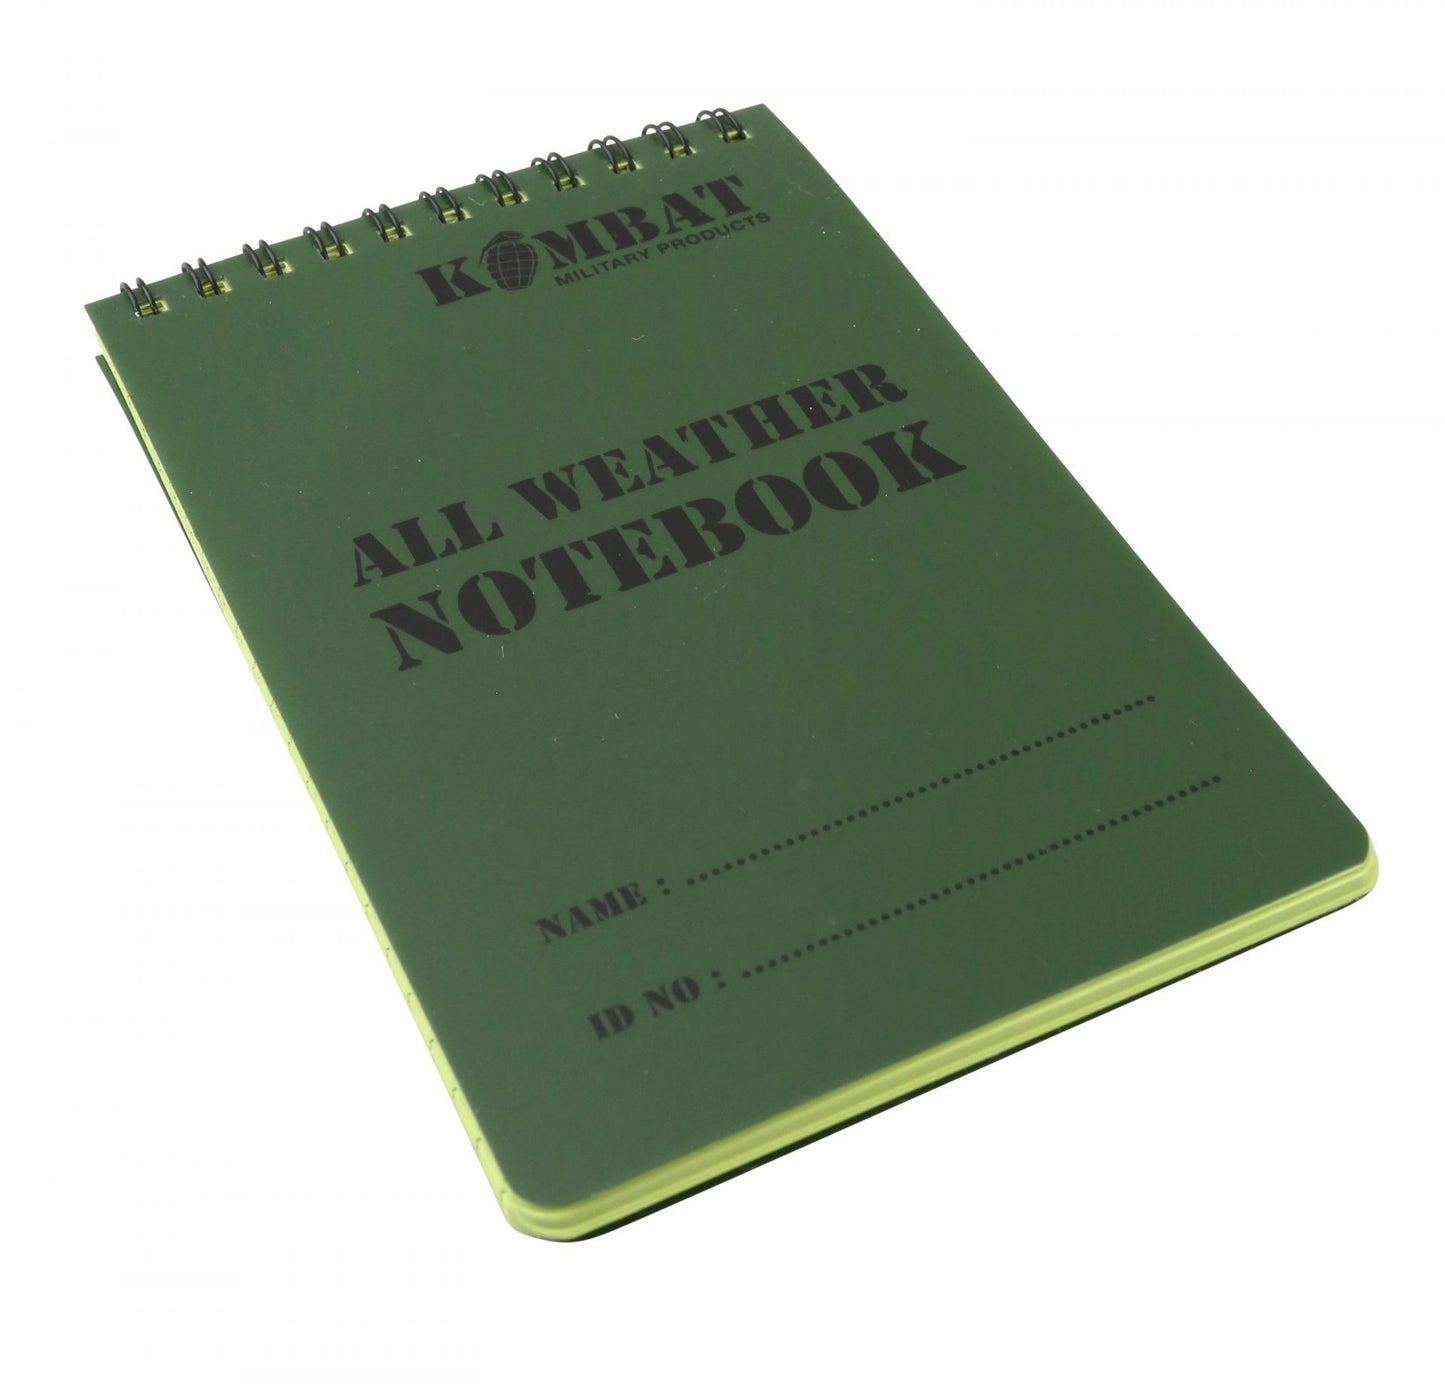 A6 Waterproof Notepad